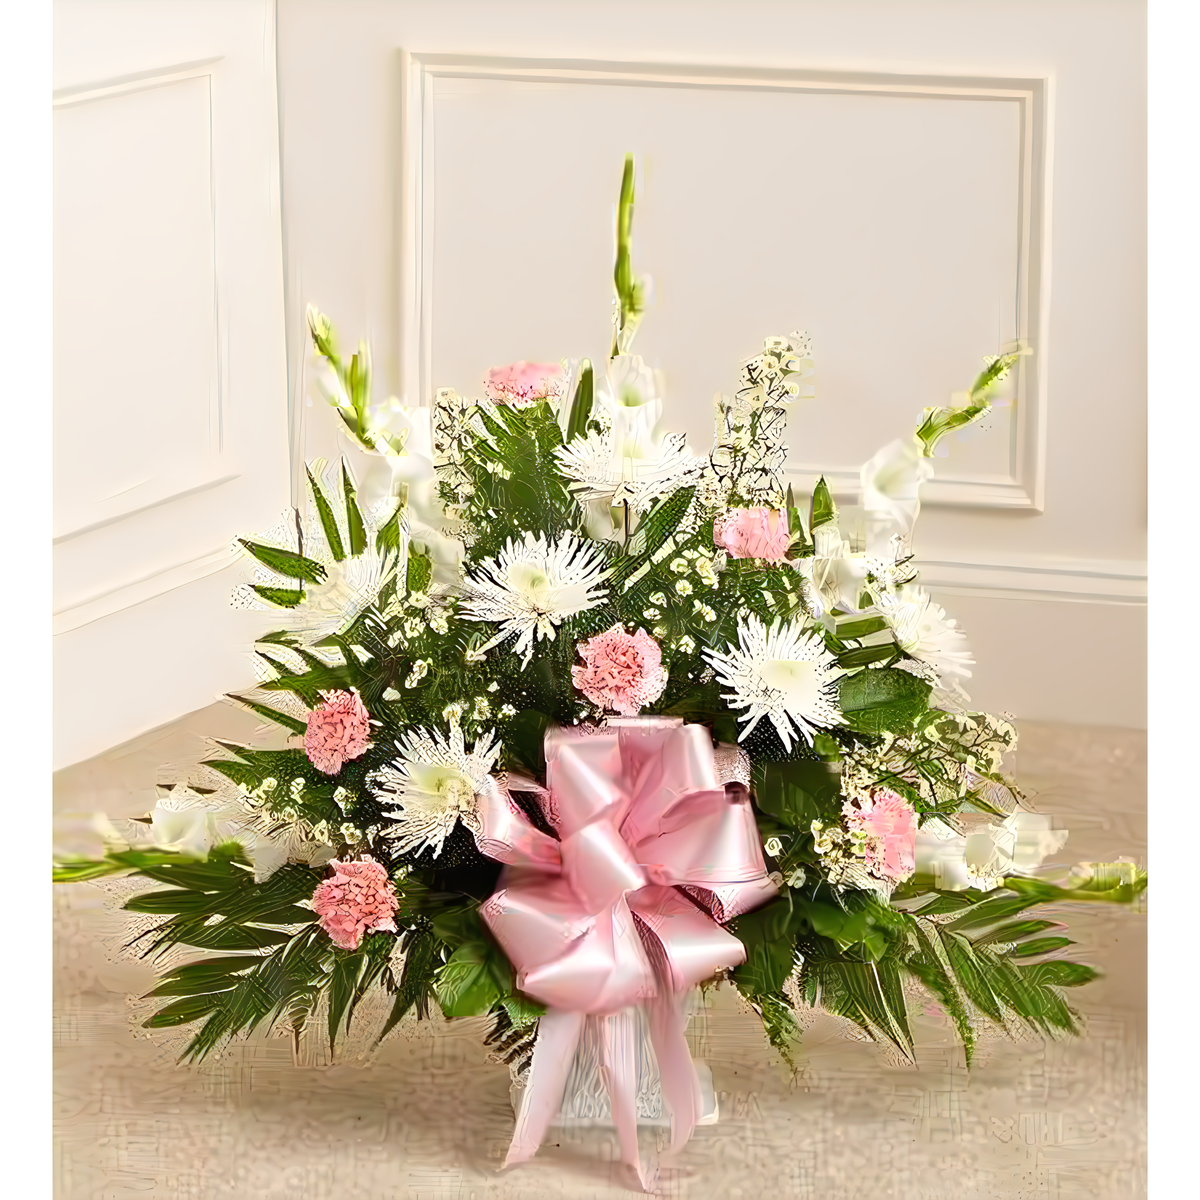 Manhattan Flower Delivery - Tribute Pink &amp; White Floor Basket Arrangement - Funeral &gt; For the Service